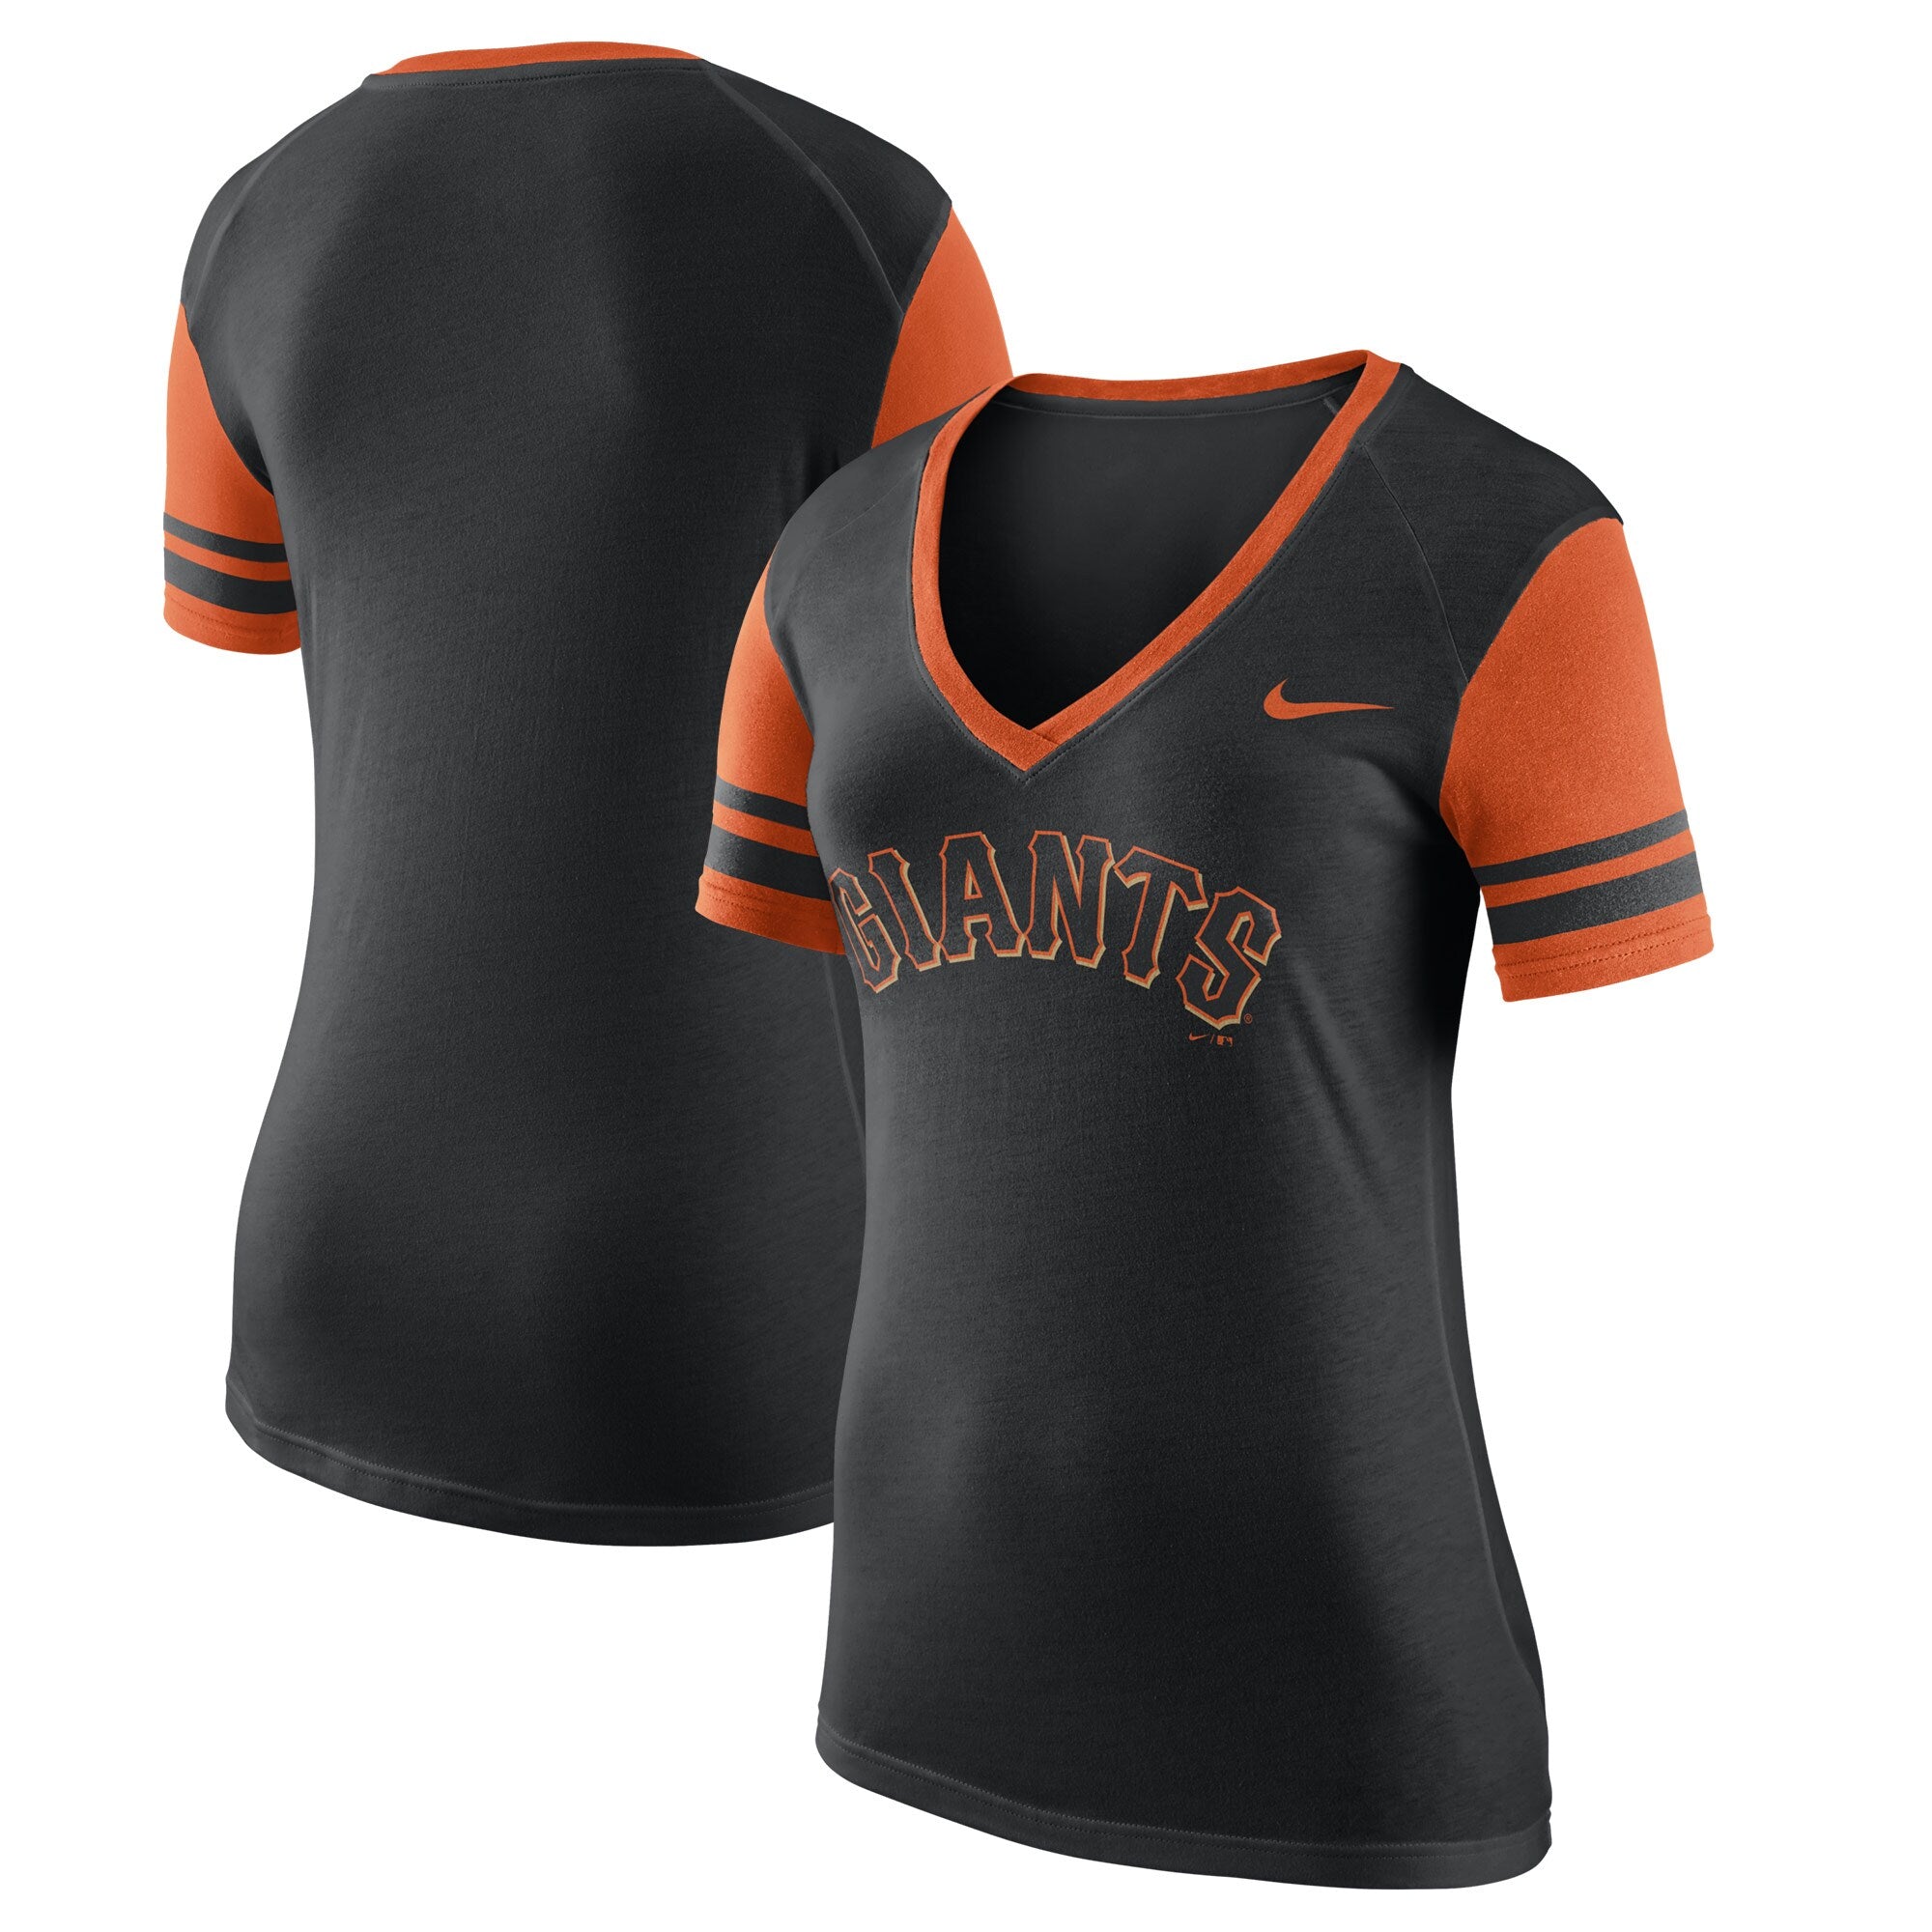 Nike Women's San Francisco Giants Logo Colorblock V-Neck T-Shirt-Black/Orange